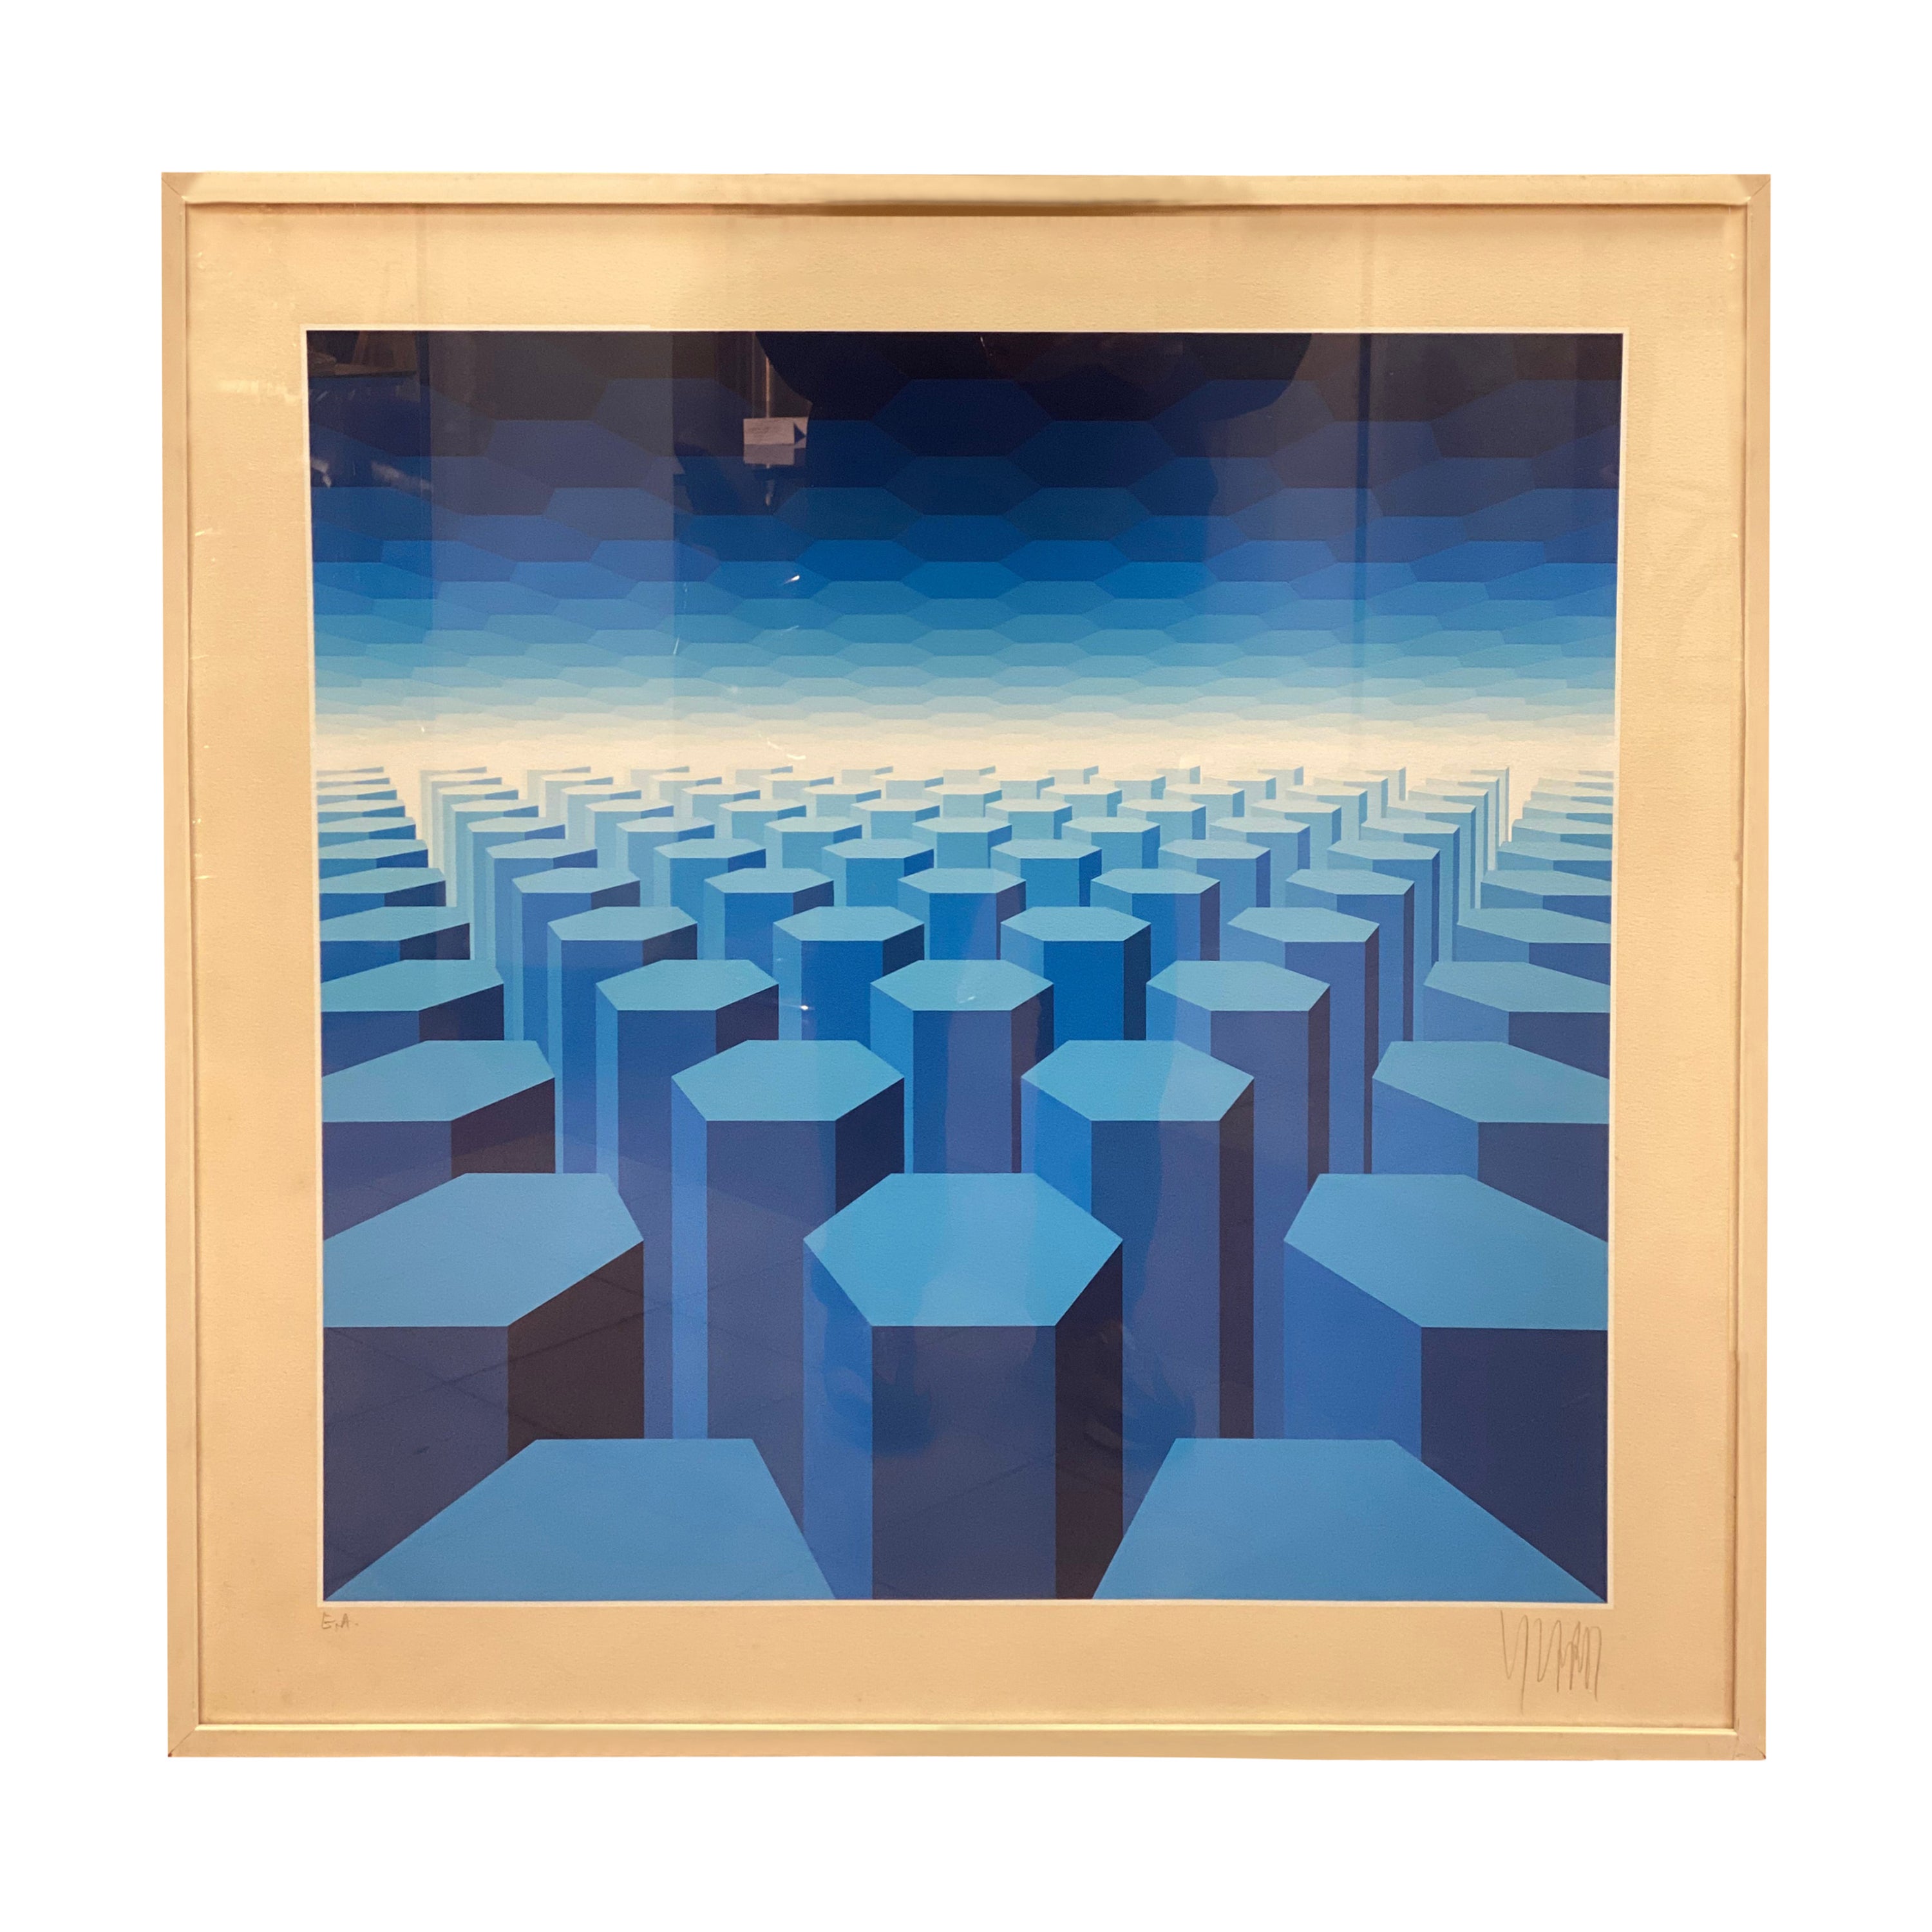 Yvaral (Jean Pierre Vasarely) “So Shades of Blue” - Circa 1970